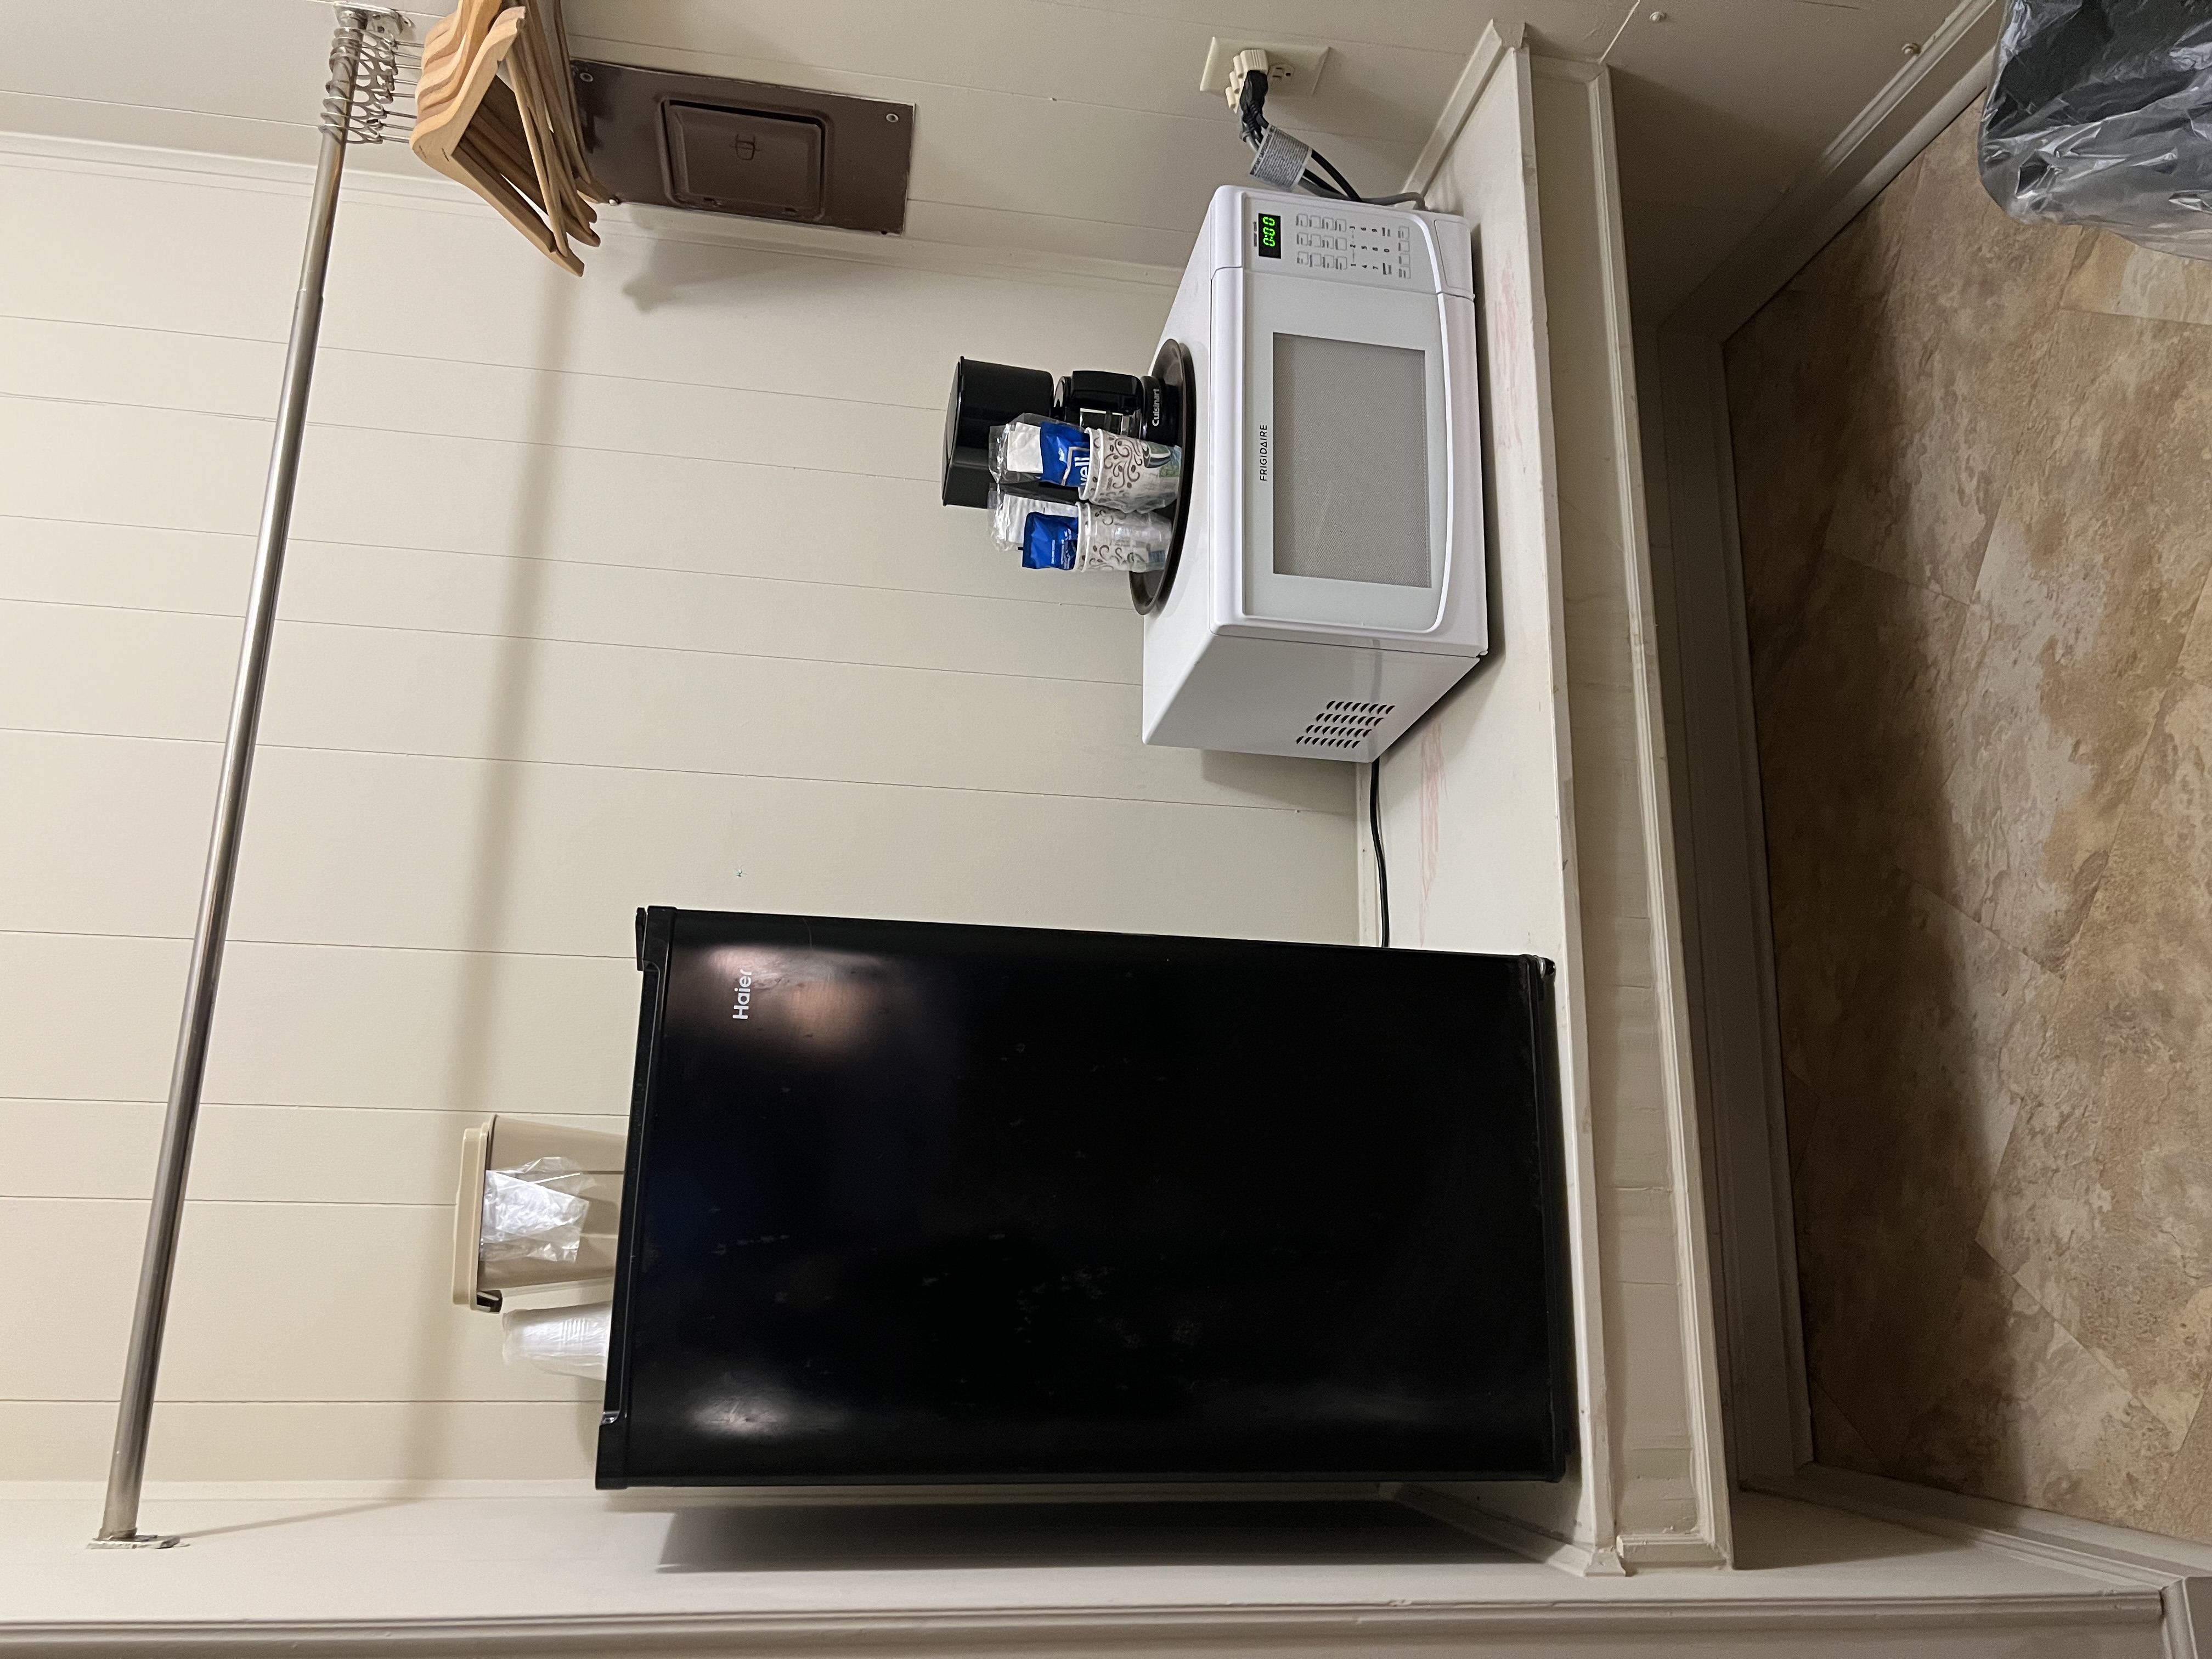 a black refrigerator and a microwave on a white shelf